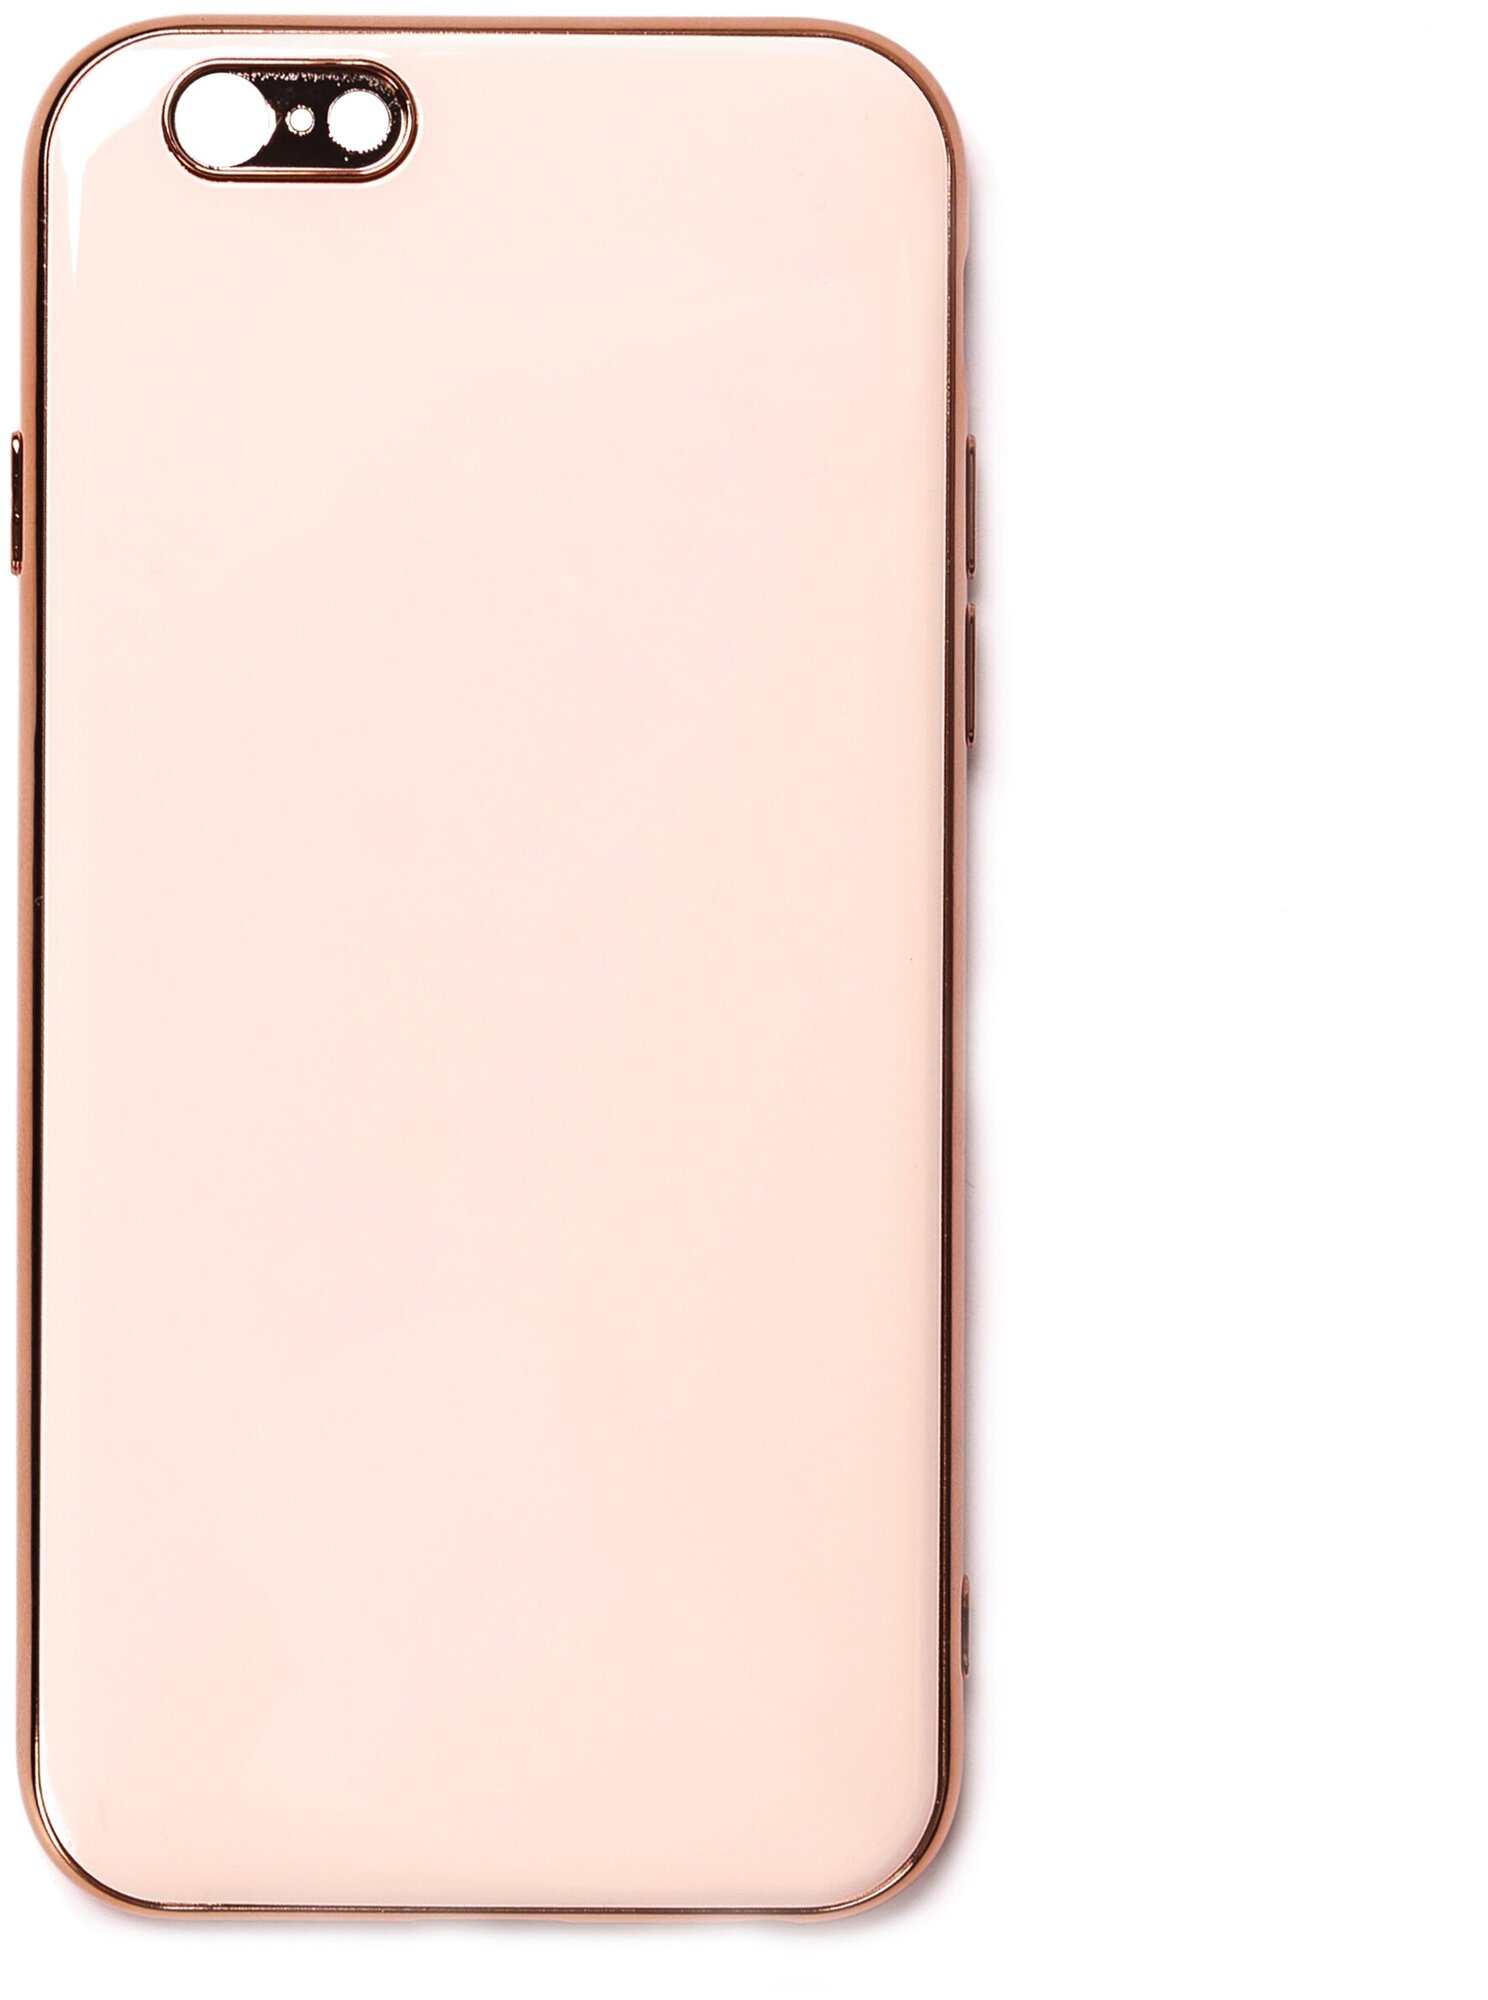 Чехол для Apple IPhone 6/6s - Розовый